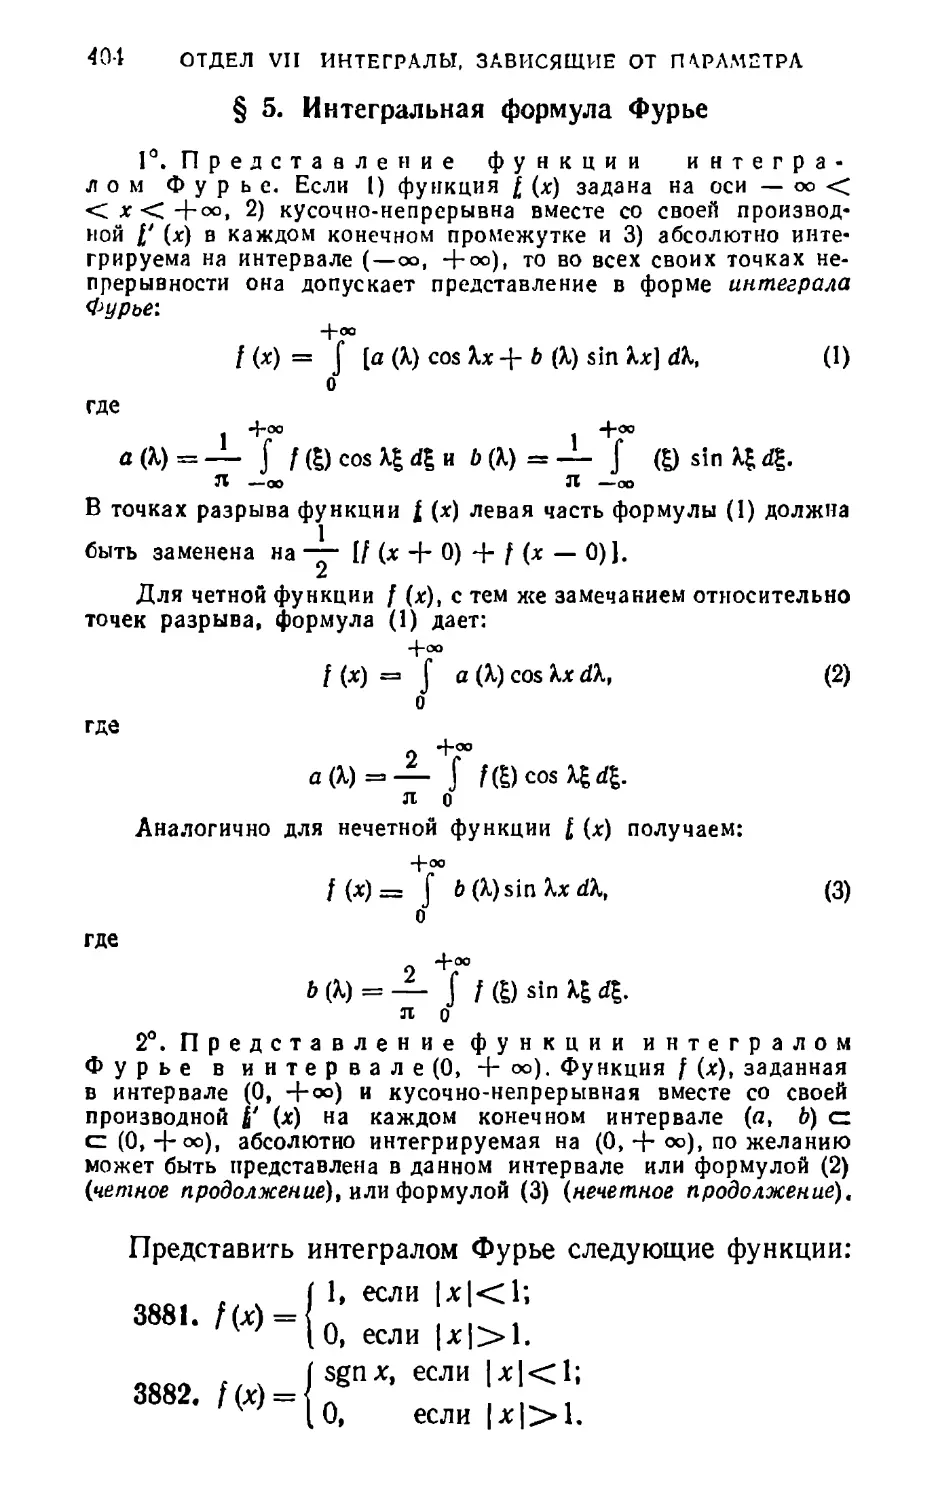 § 5. Интегральная формула Фурье